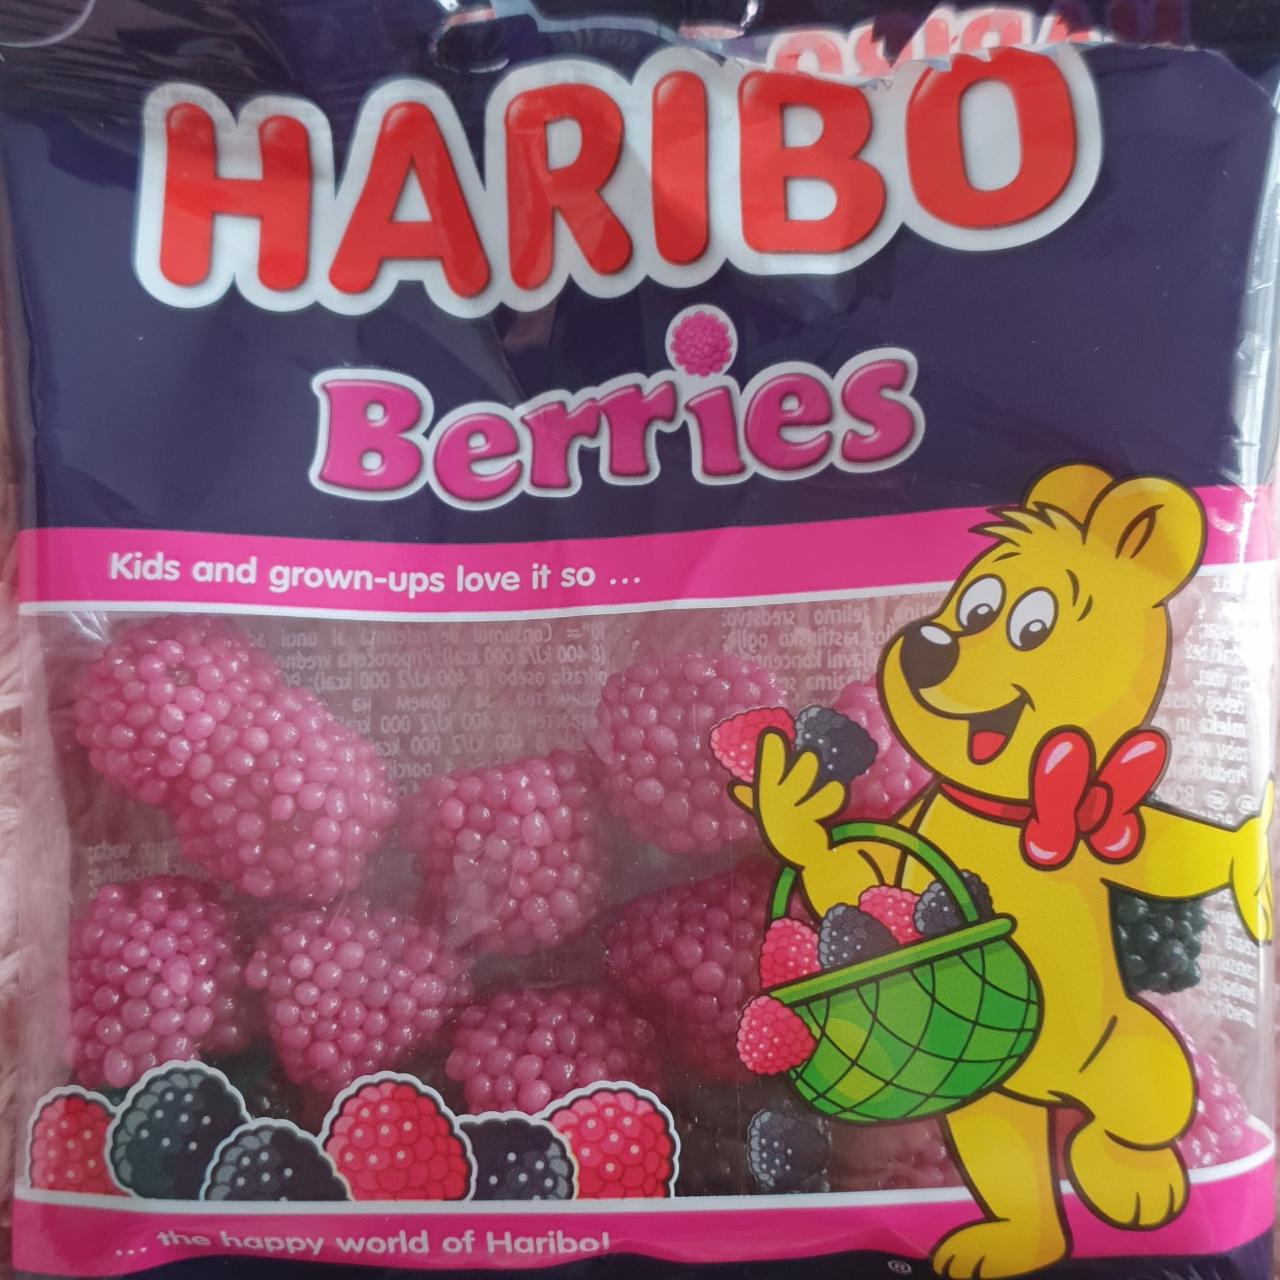 Zdjęcia - Haribo berries